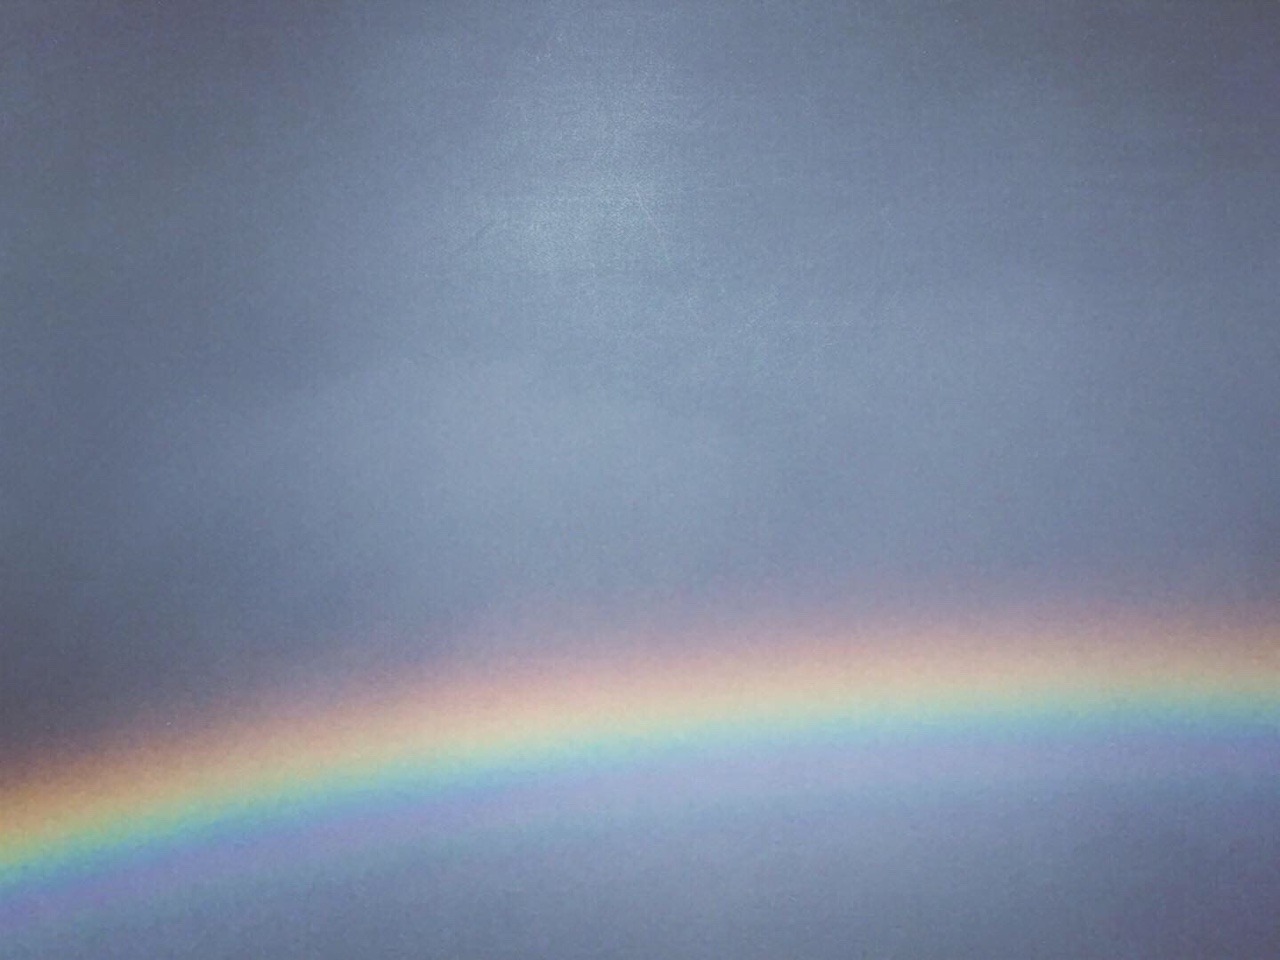 double rainbow on Tumblr